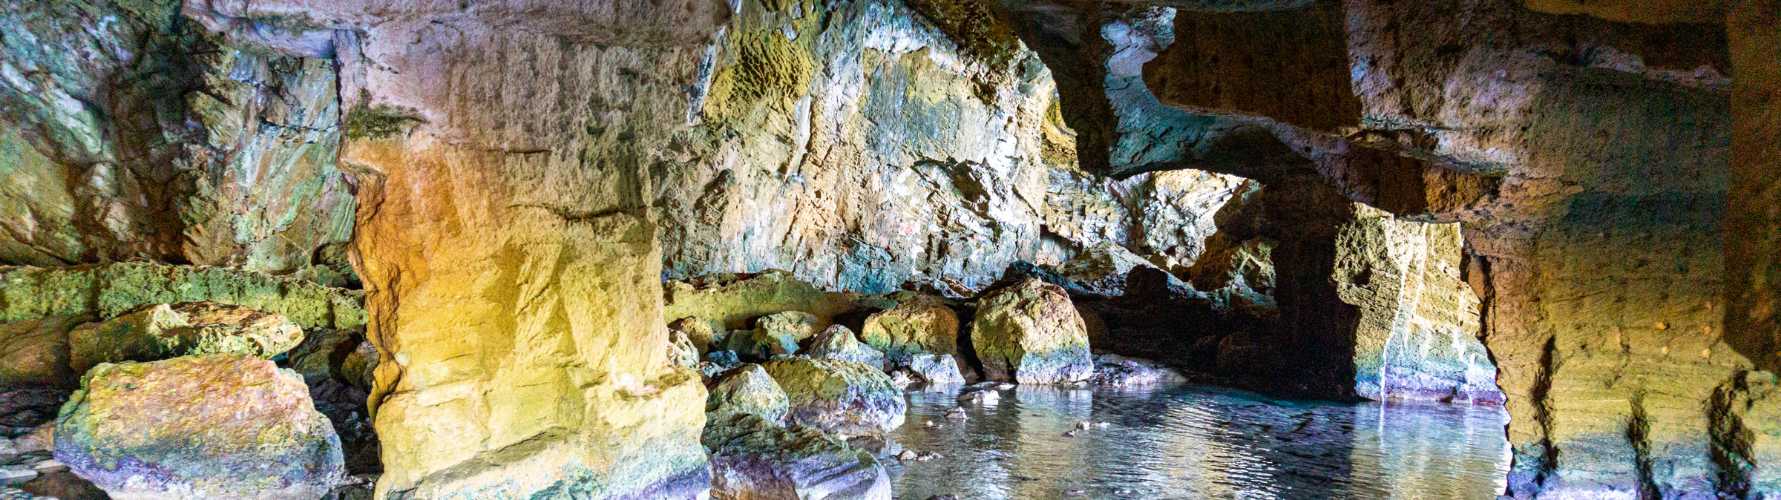 caves region of valencia